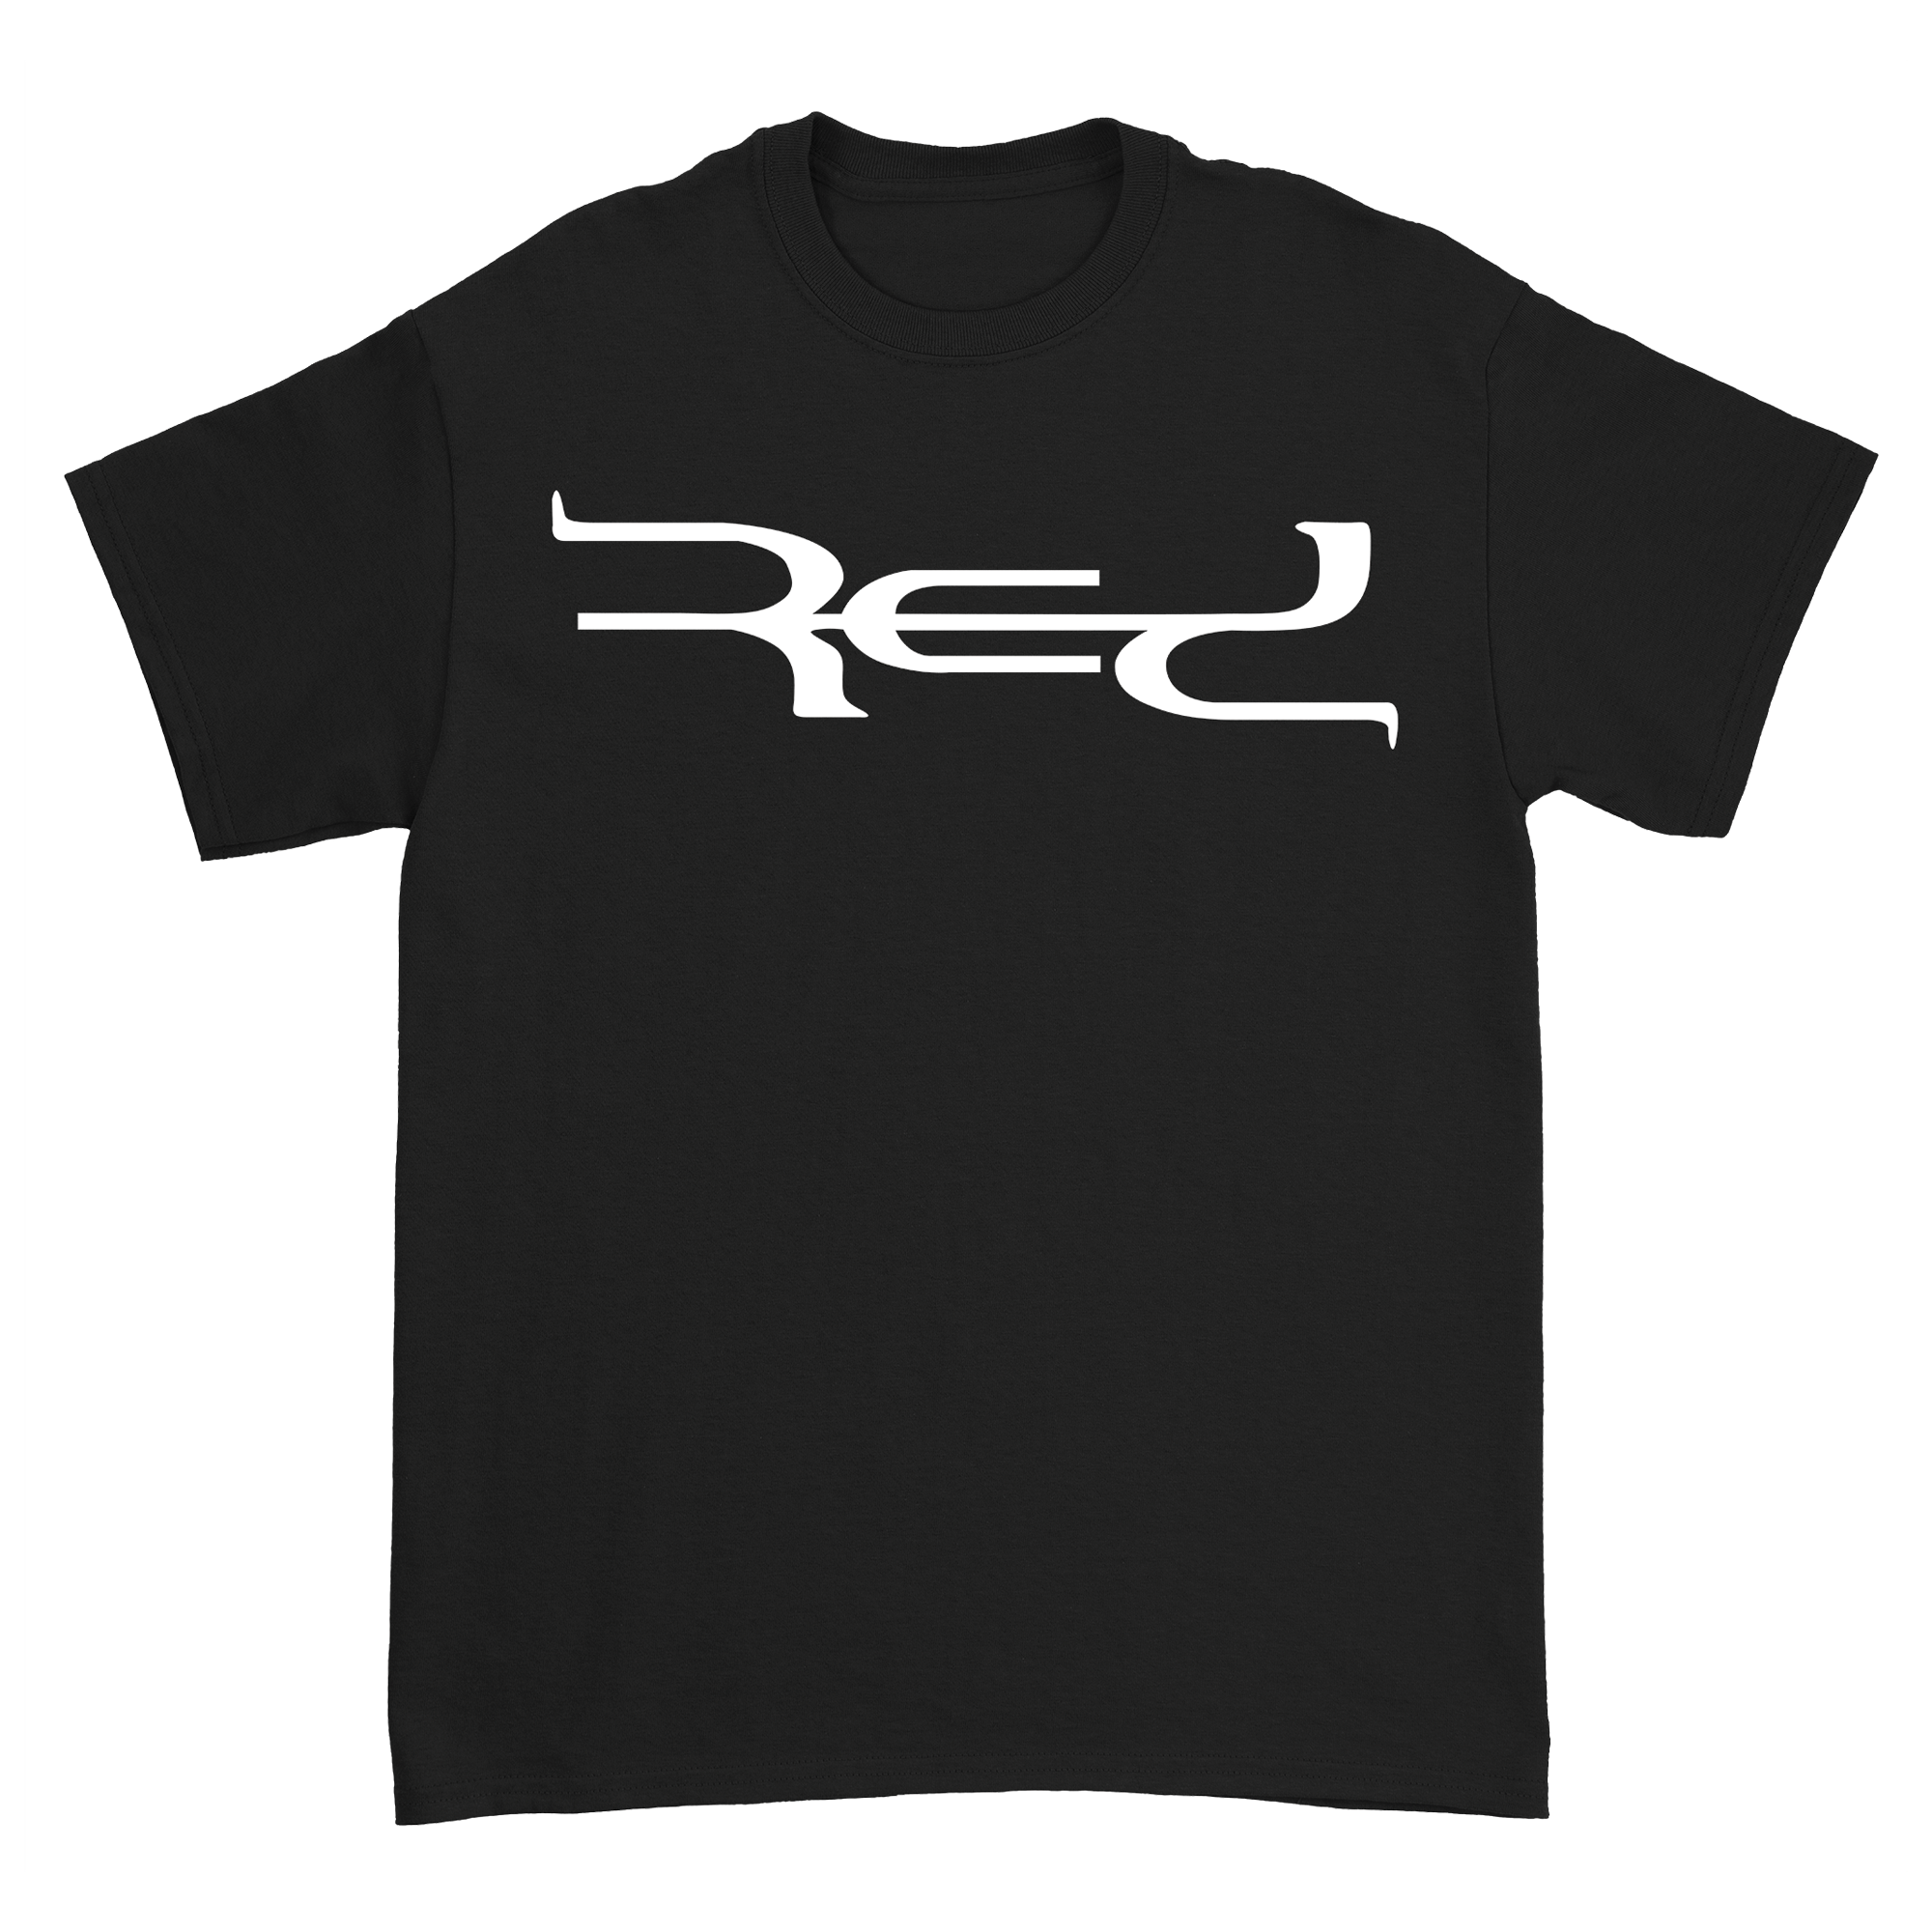 RED White Logo Tee